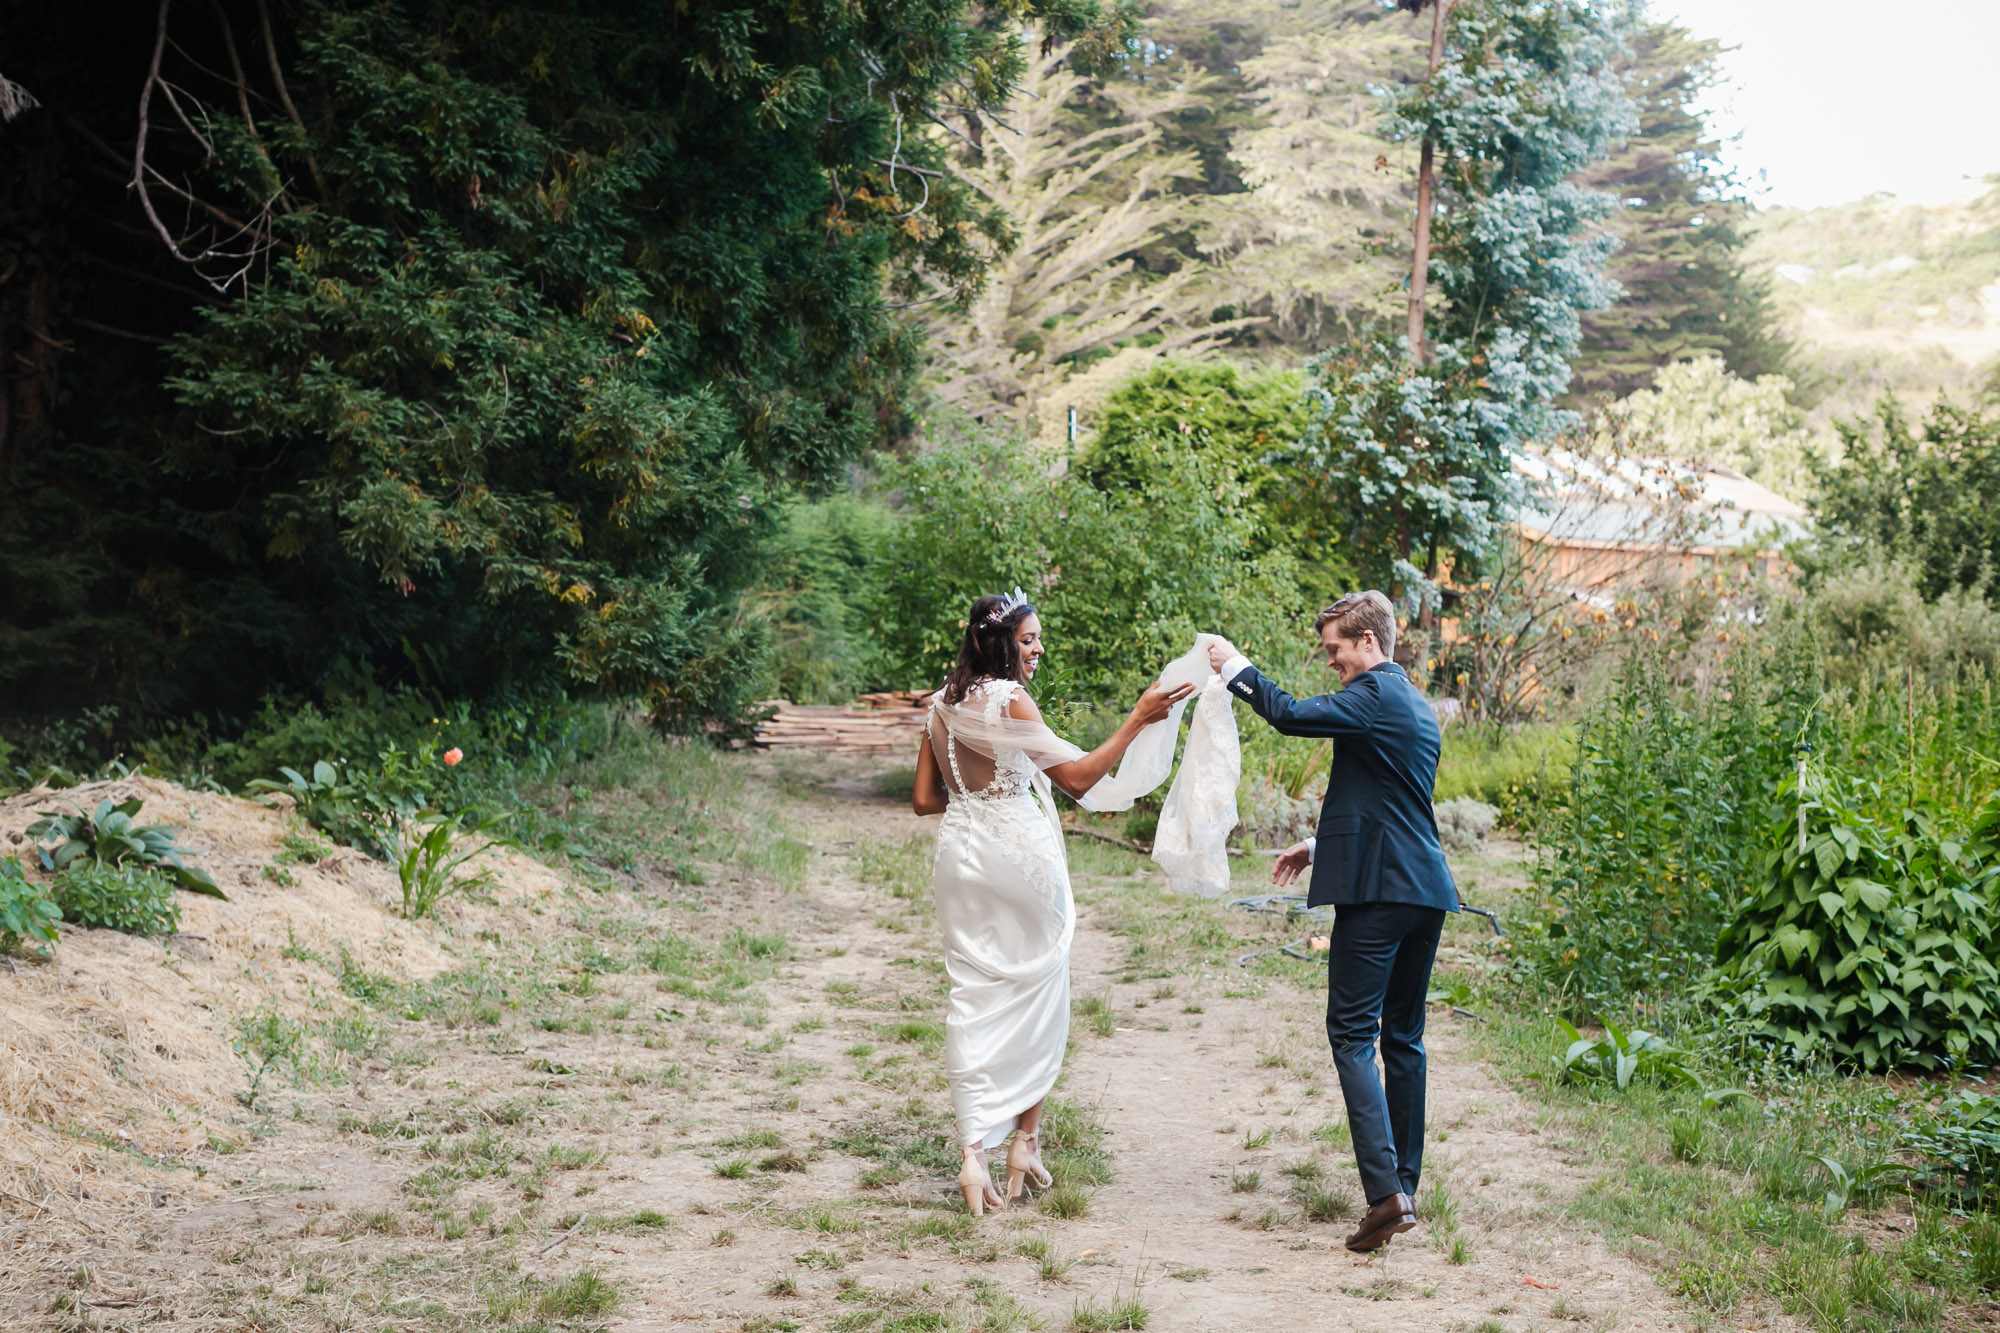 Groom helps his bride with her veil as they walk through their California farm wedding venue